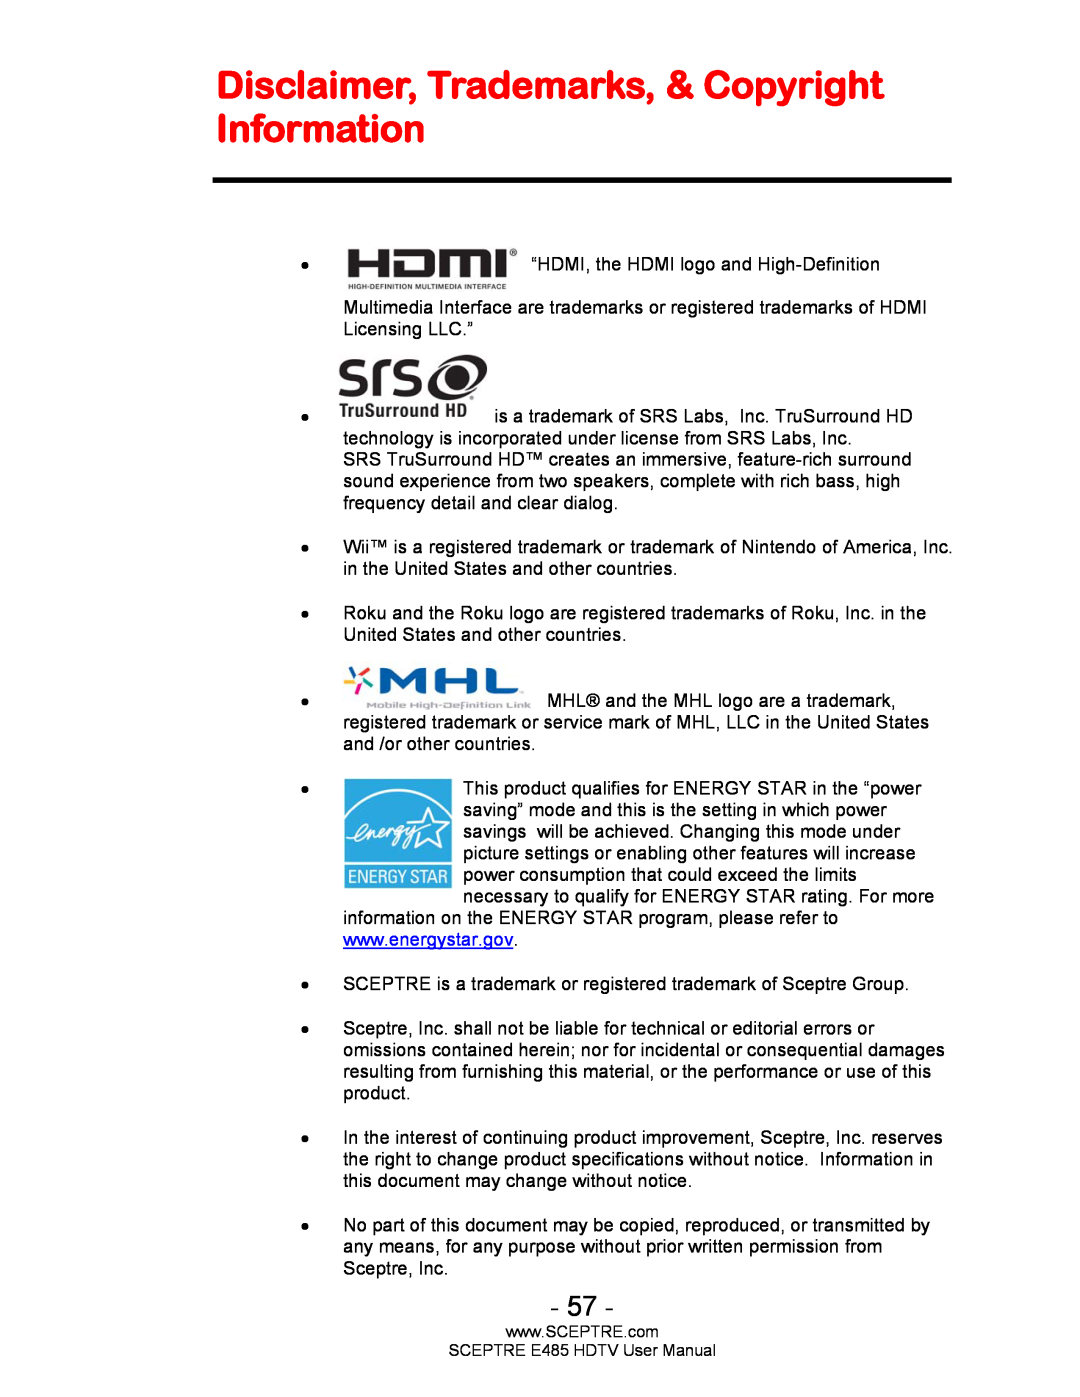 Sceptre Technologies E485 user manual Disclaimer, Trademarks, & Copyright Information 